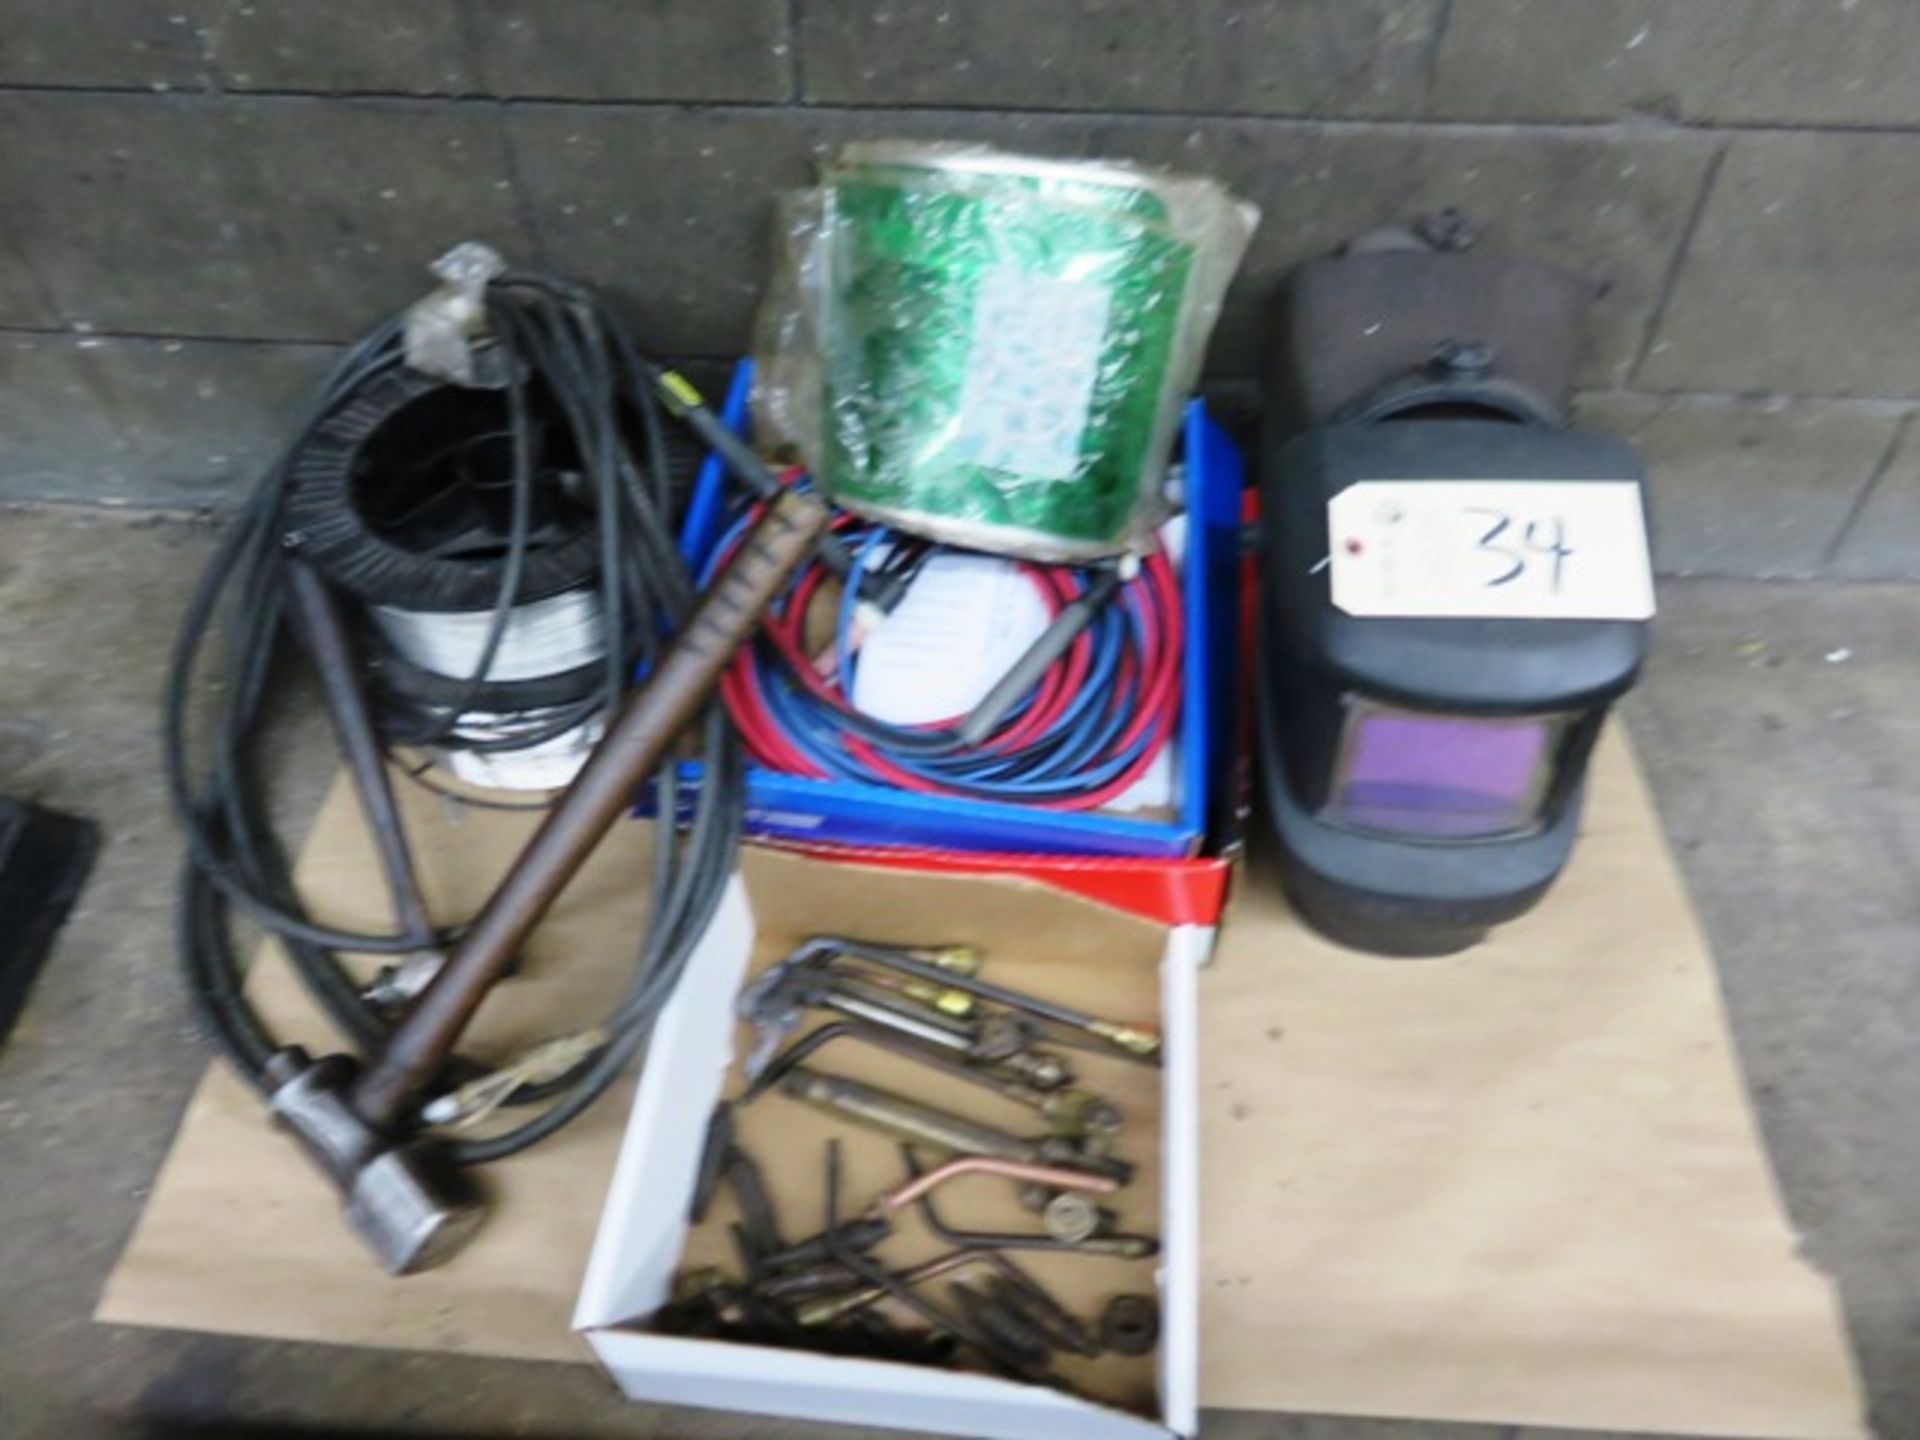 Welding Accessories, Mask, Welding Wire, Tig Torches, Etc.